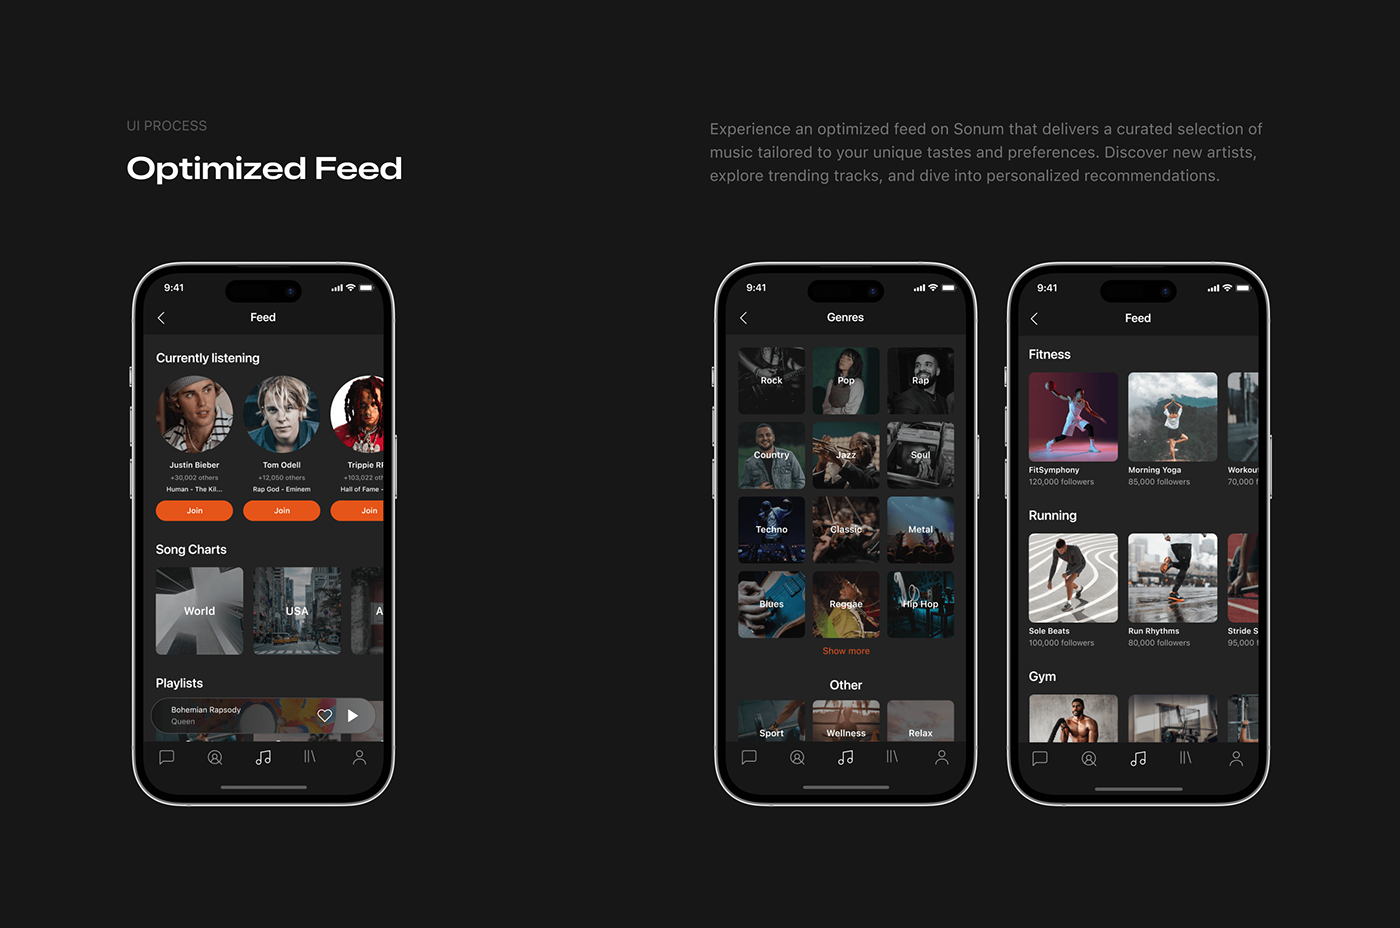 ux interaction ios app Entertainment marketing   visual identity animation  brand UI